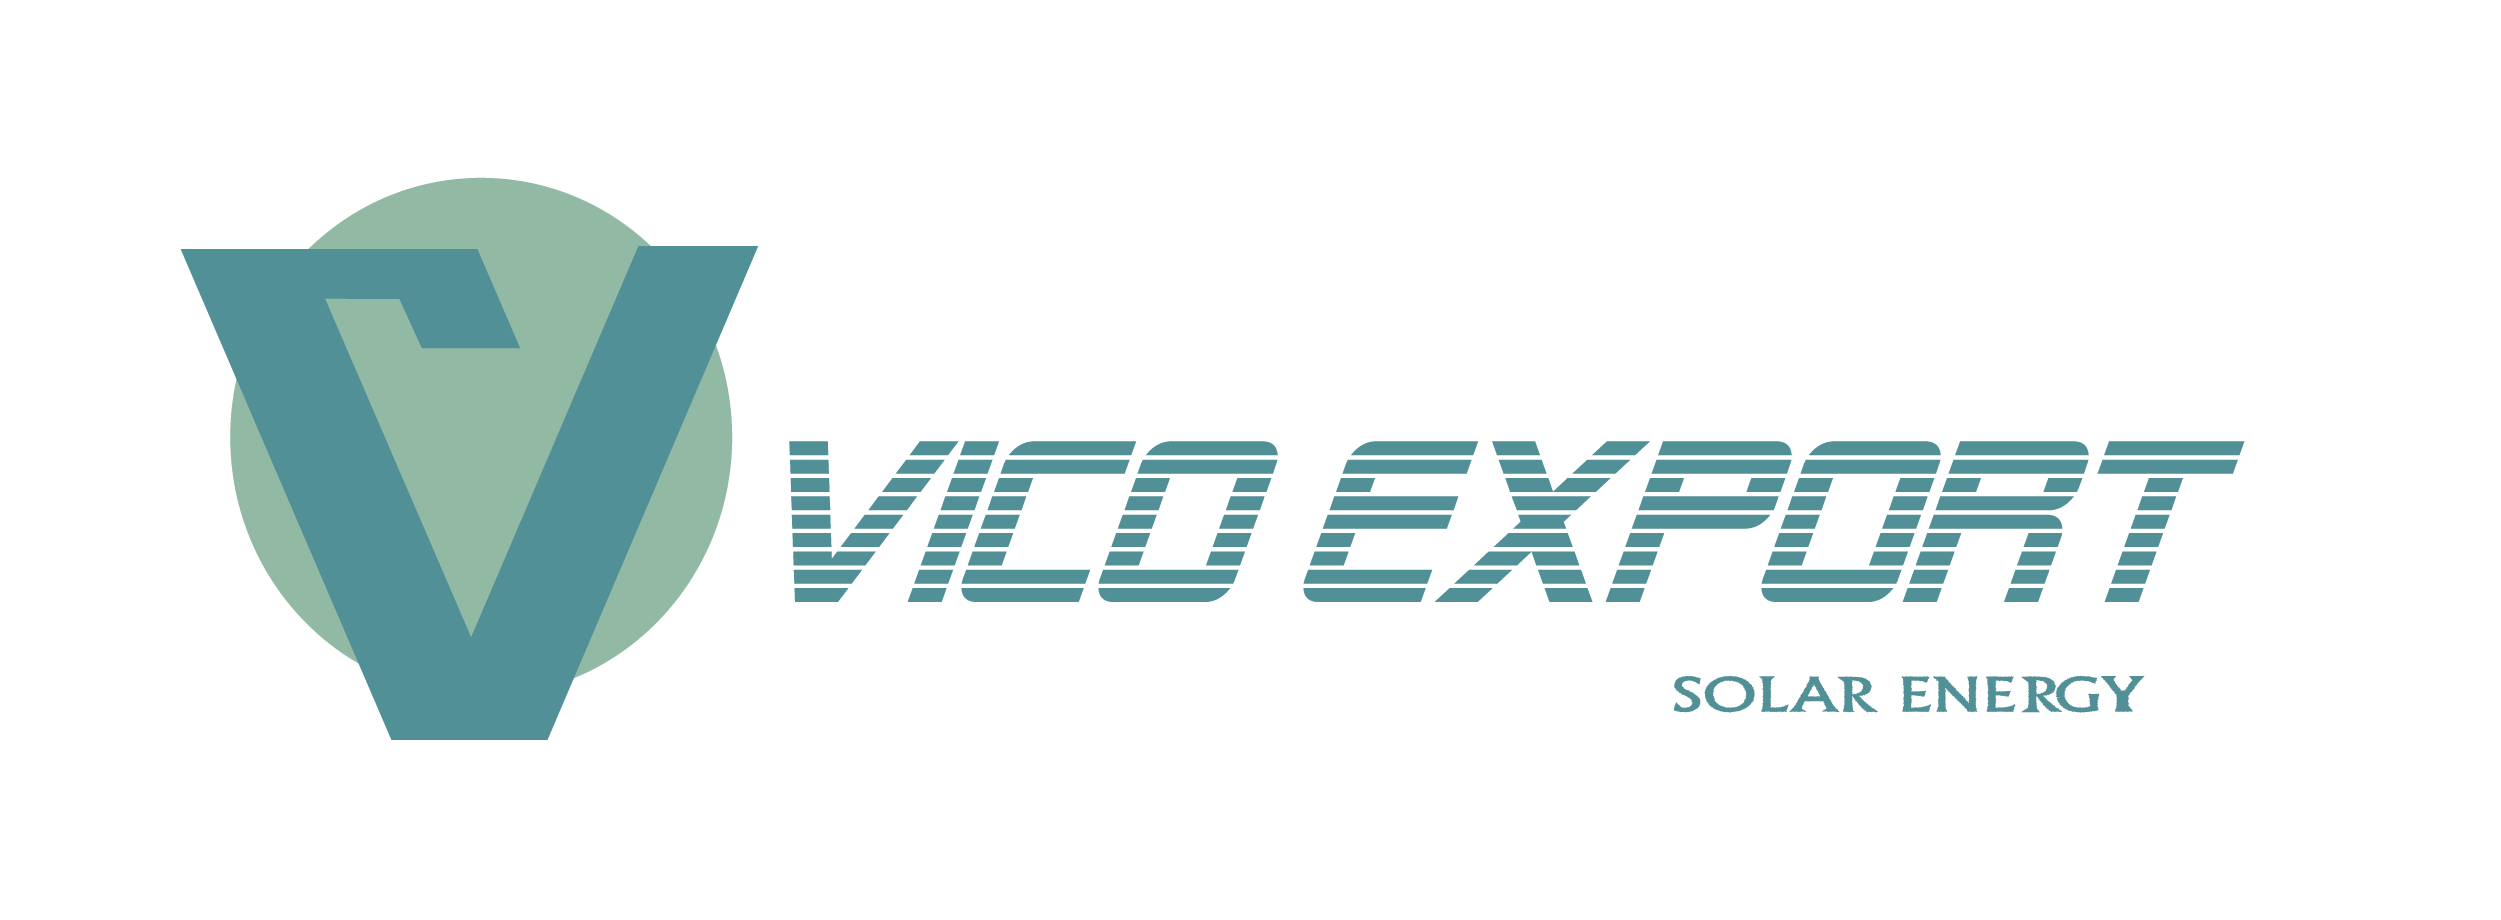 vico export solar energy